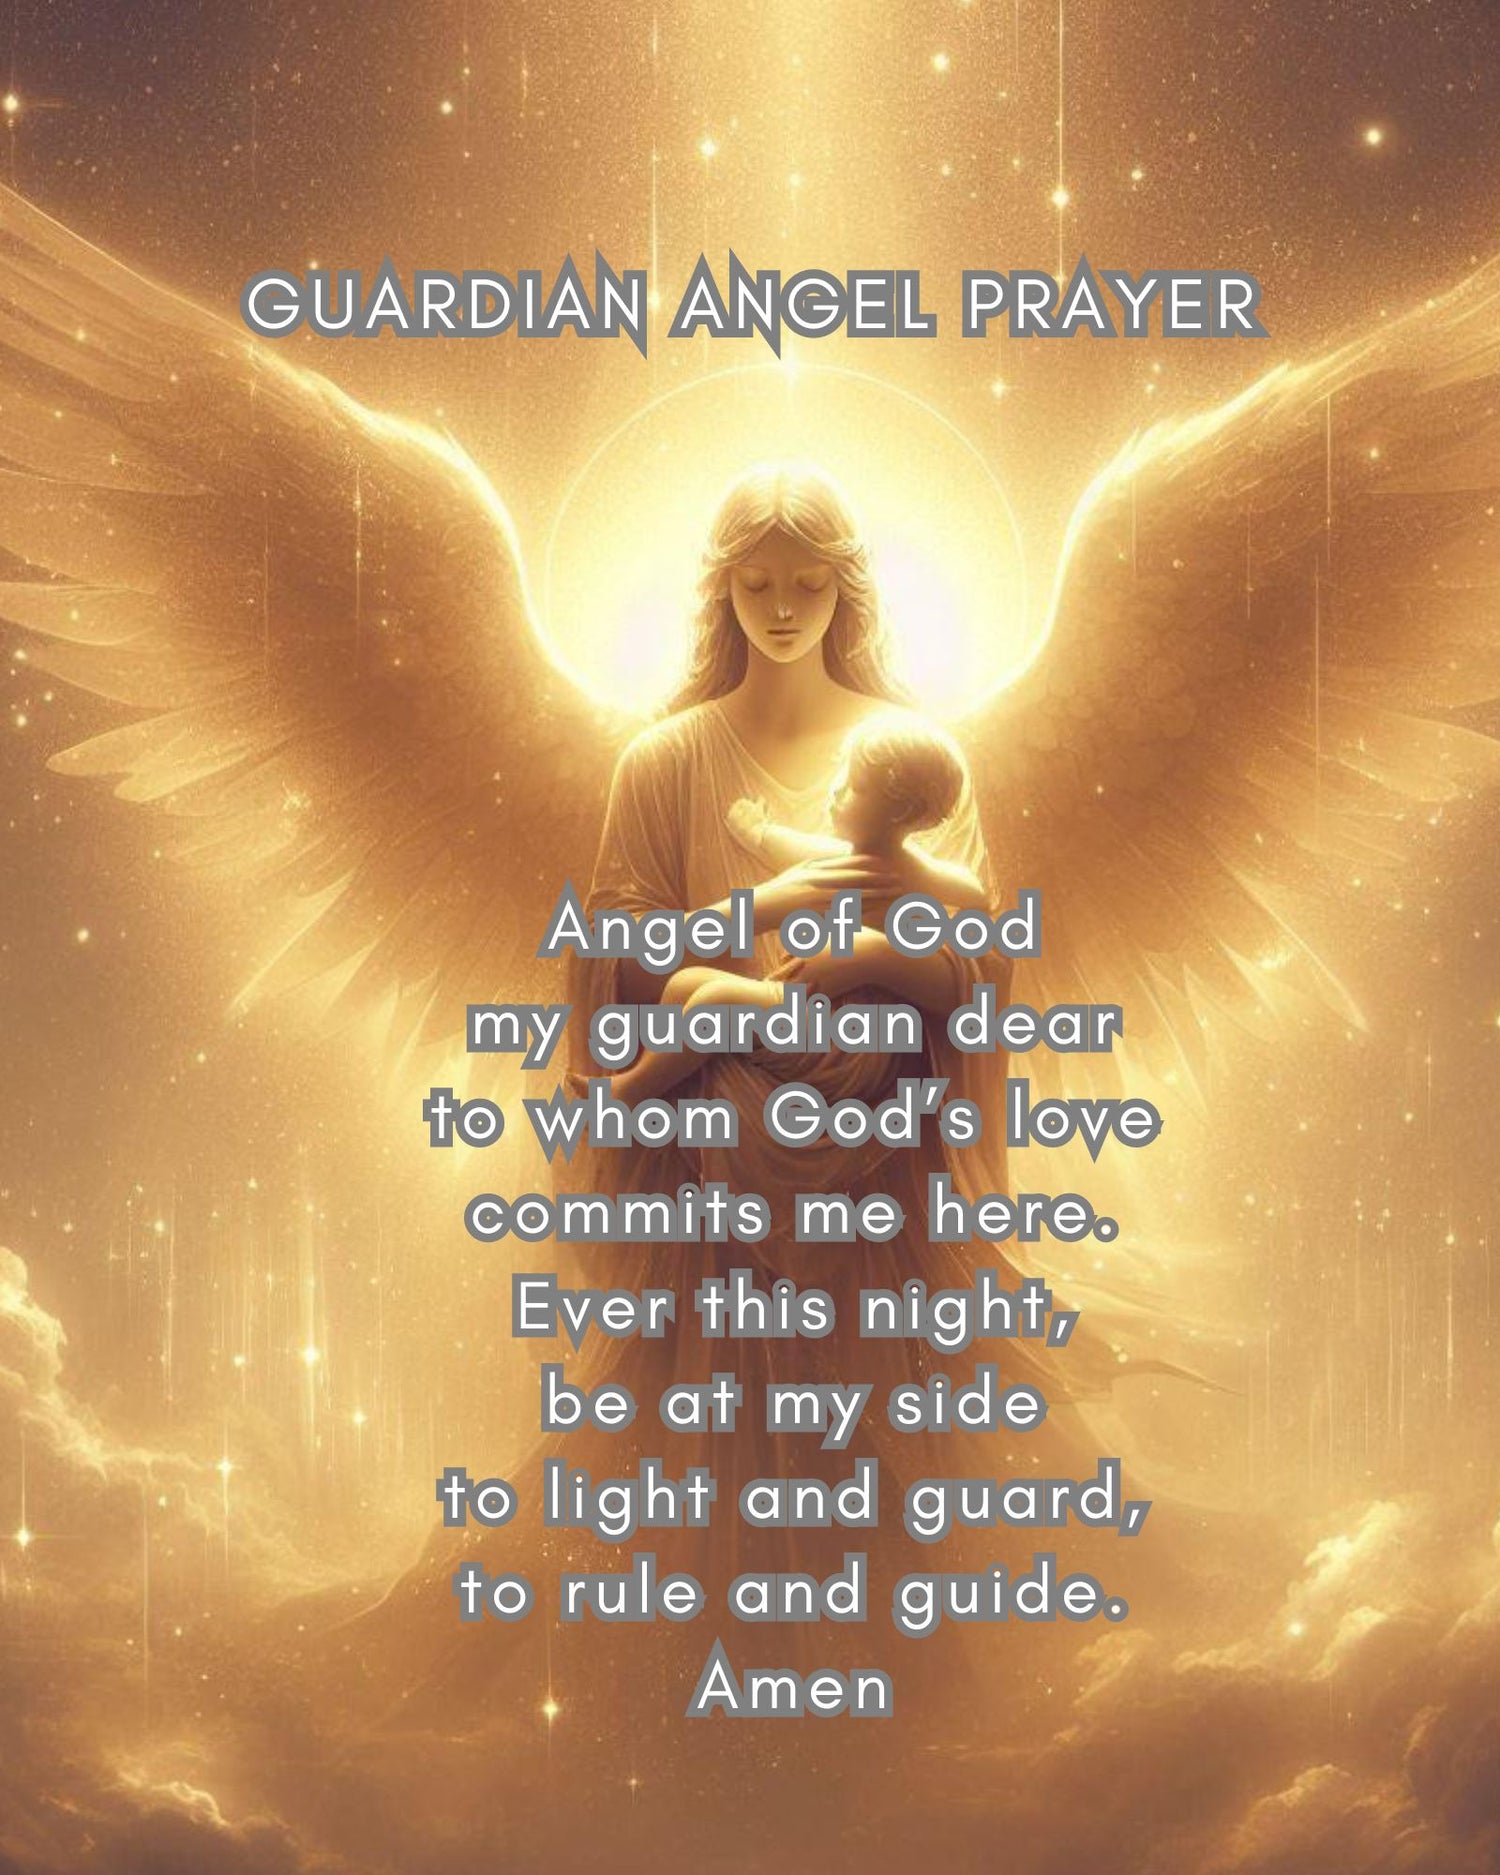 Guardian Angel prayer wakalangka instant download, printables, home decor, serene and inspiring atmosphere, uplift your spirit, art prints, Christian Decor,